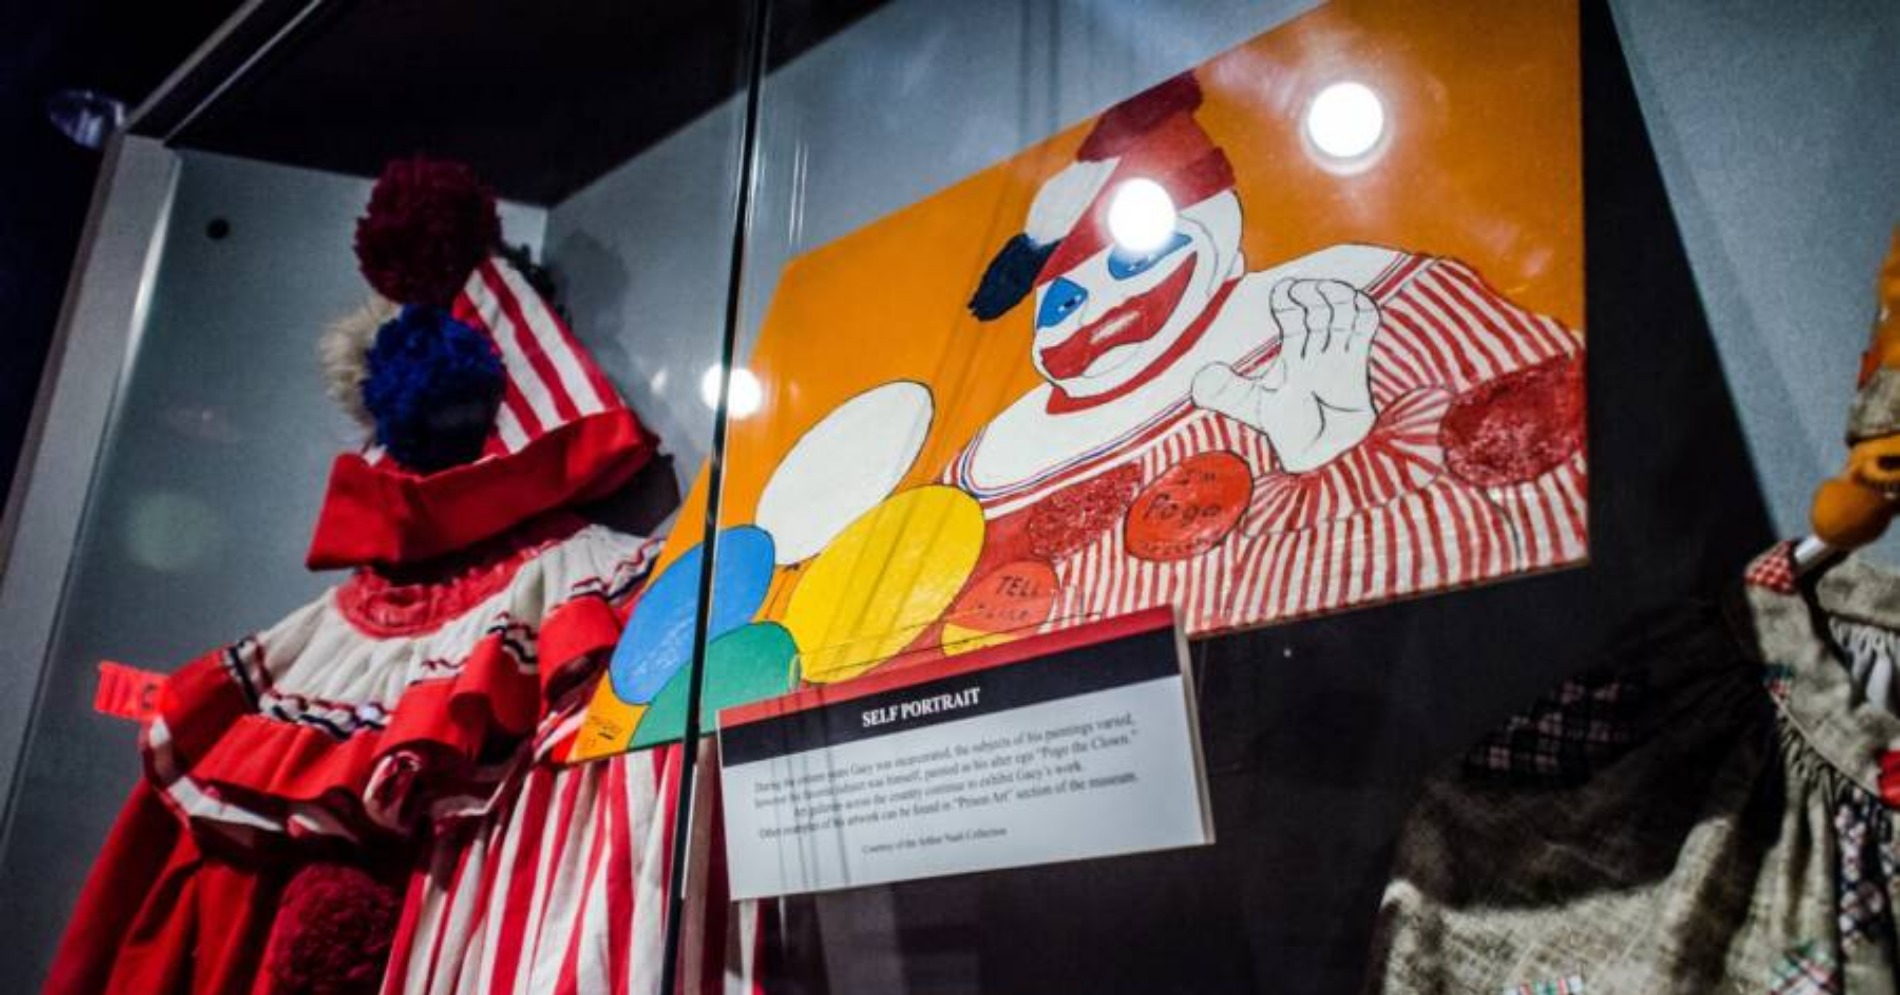 John Wayne Gacy paintings and memorabilia on display at the National Crime Museum.